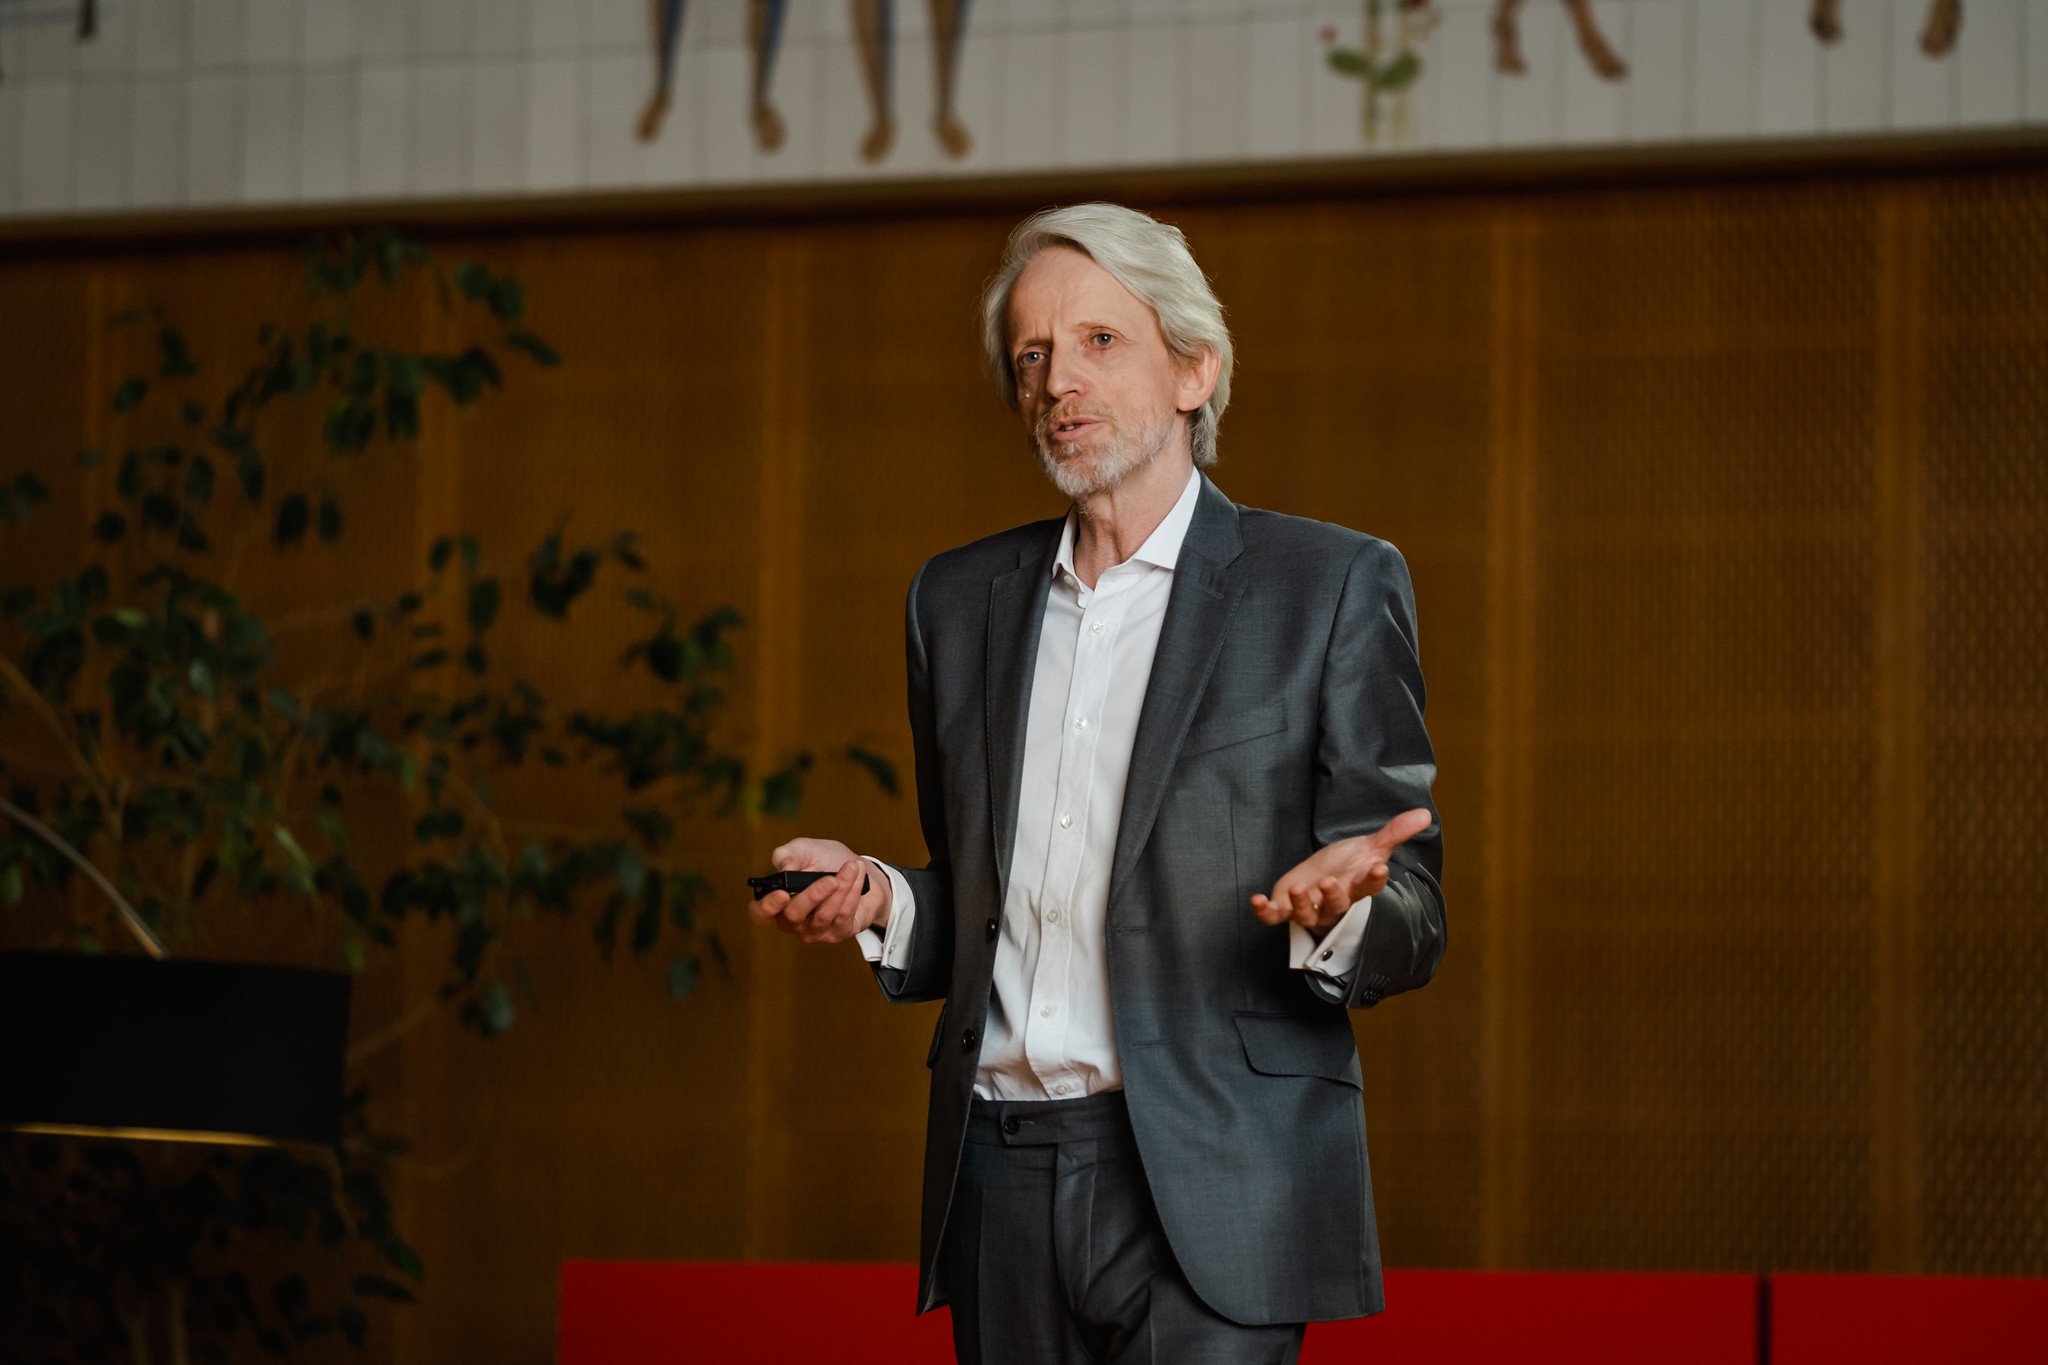 Jan Hagen speaking at TEDx Talk at ESMT Berlin 